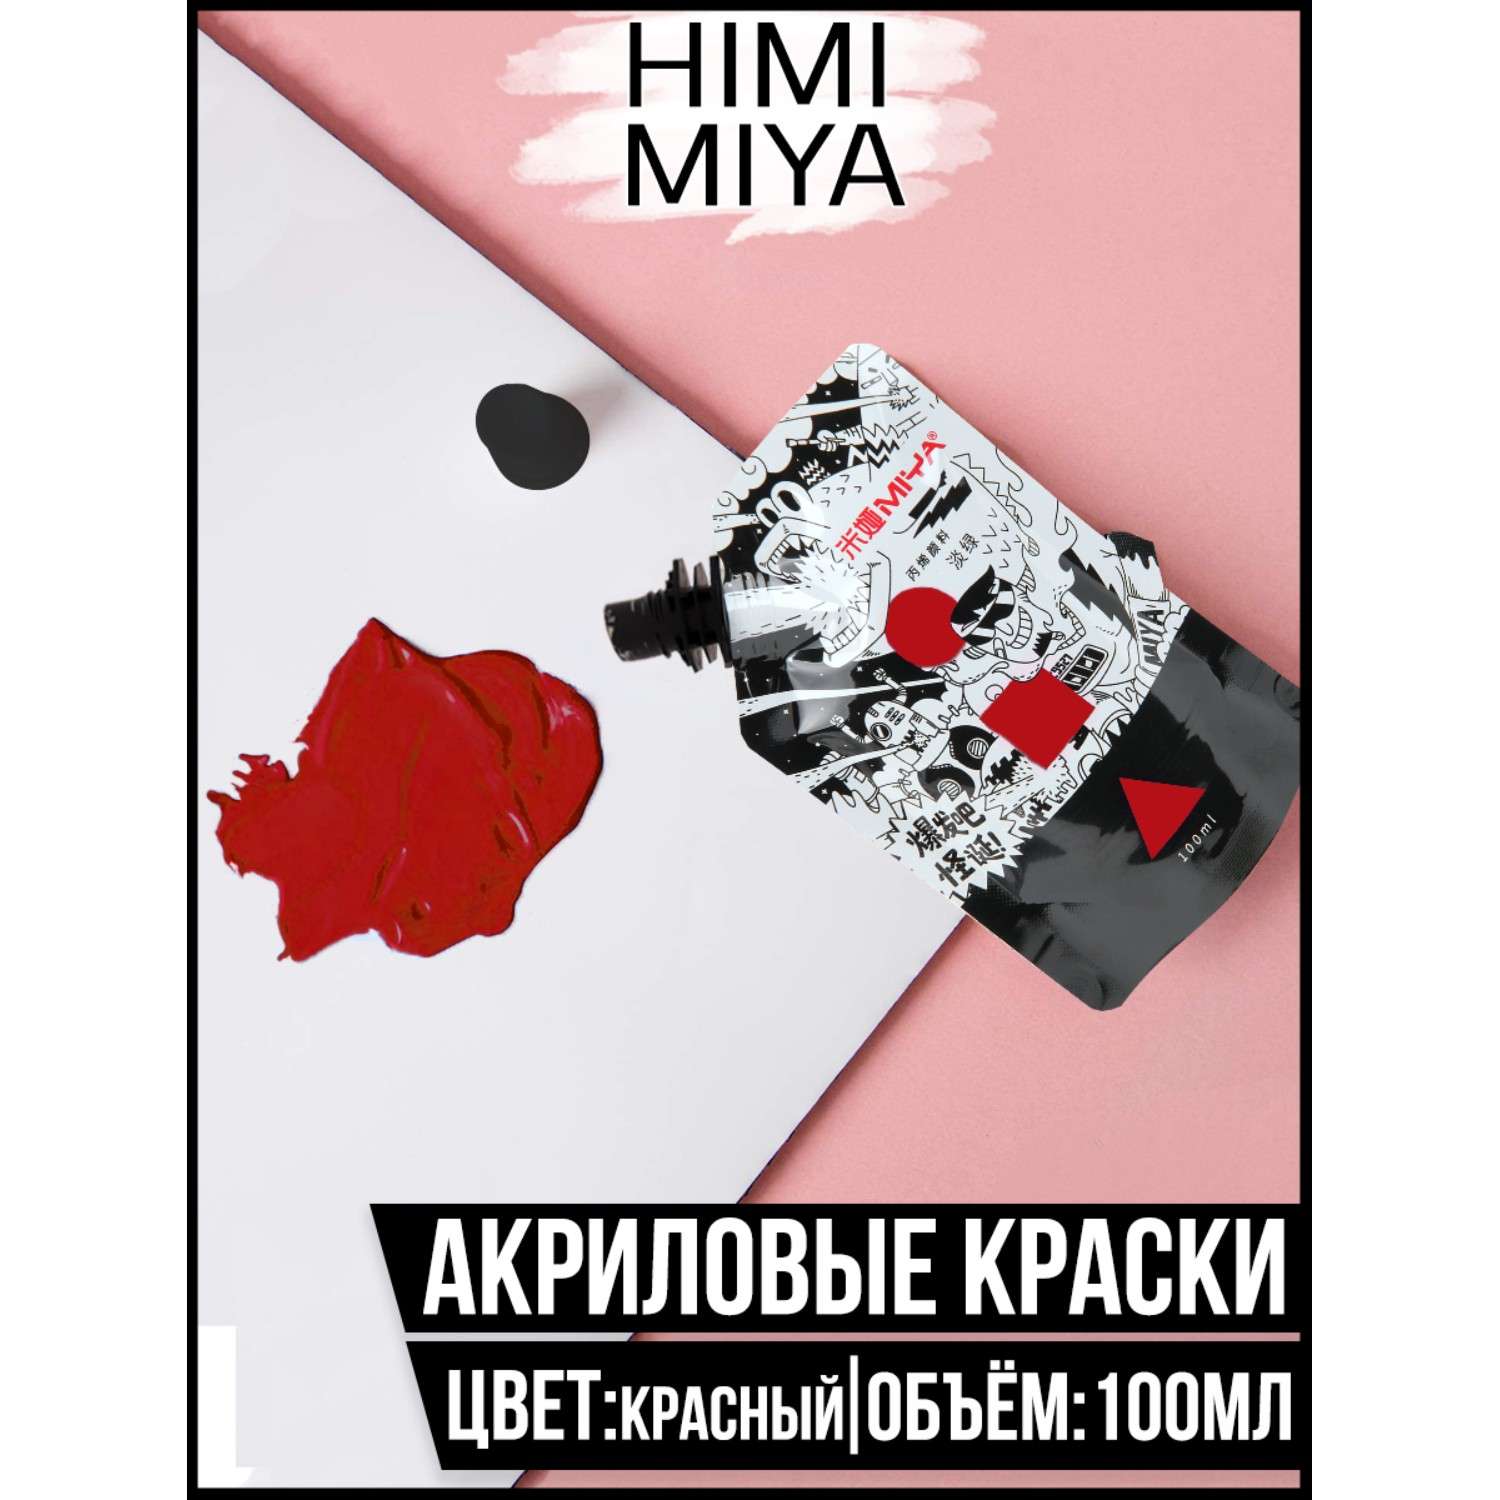 Краска акриловая HIMI MIYA в пакете Weird 100мл Red - фото 2